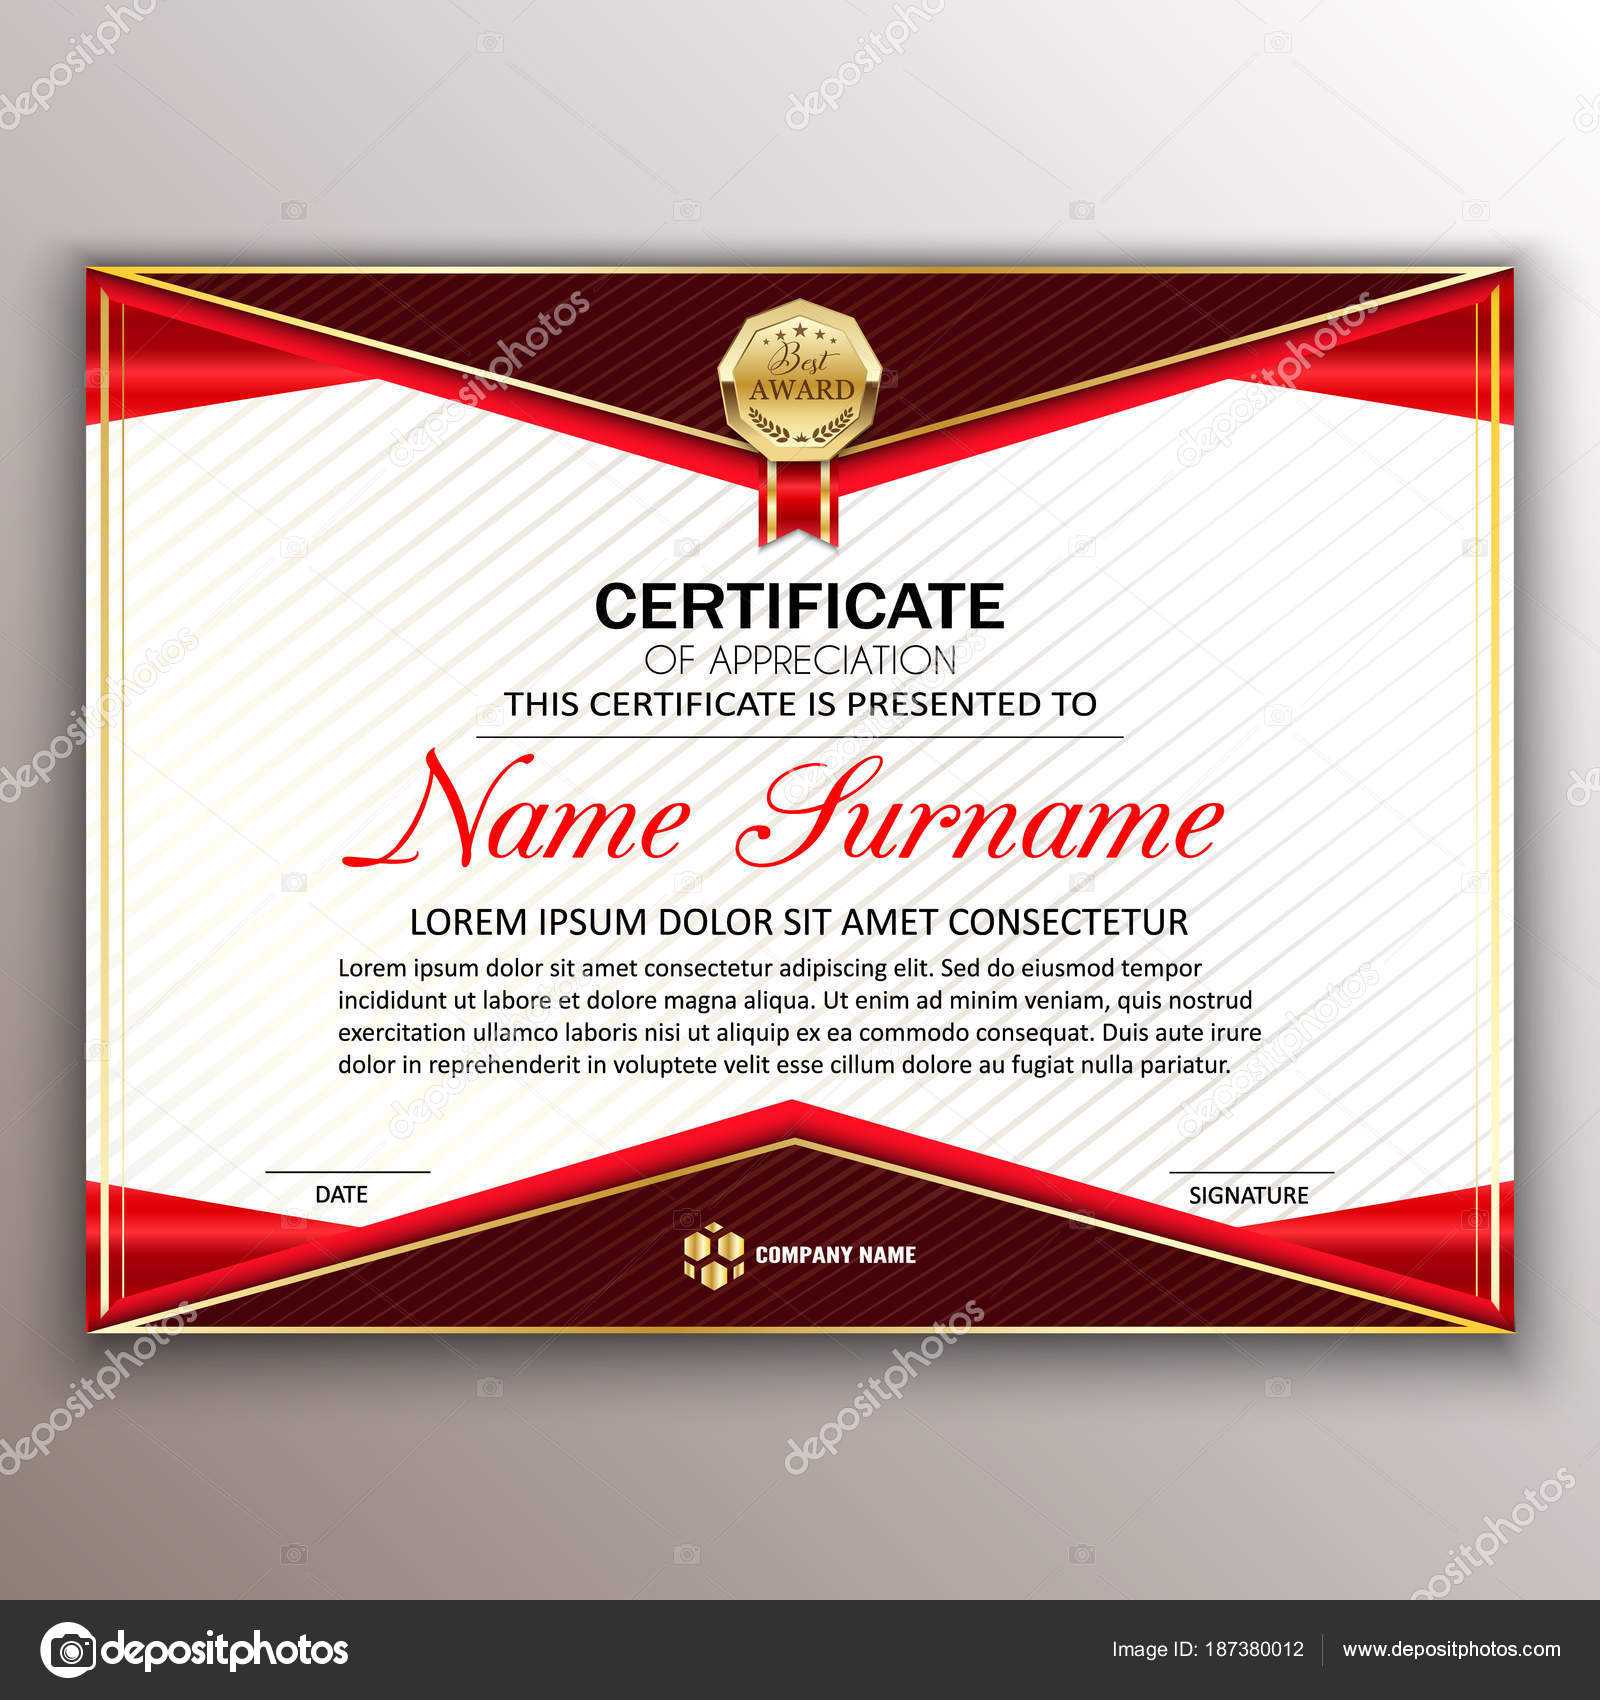 Beautiful Certificate Template Design With Best Award Symbol With Regard To Beautiful Certificate Templates